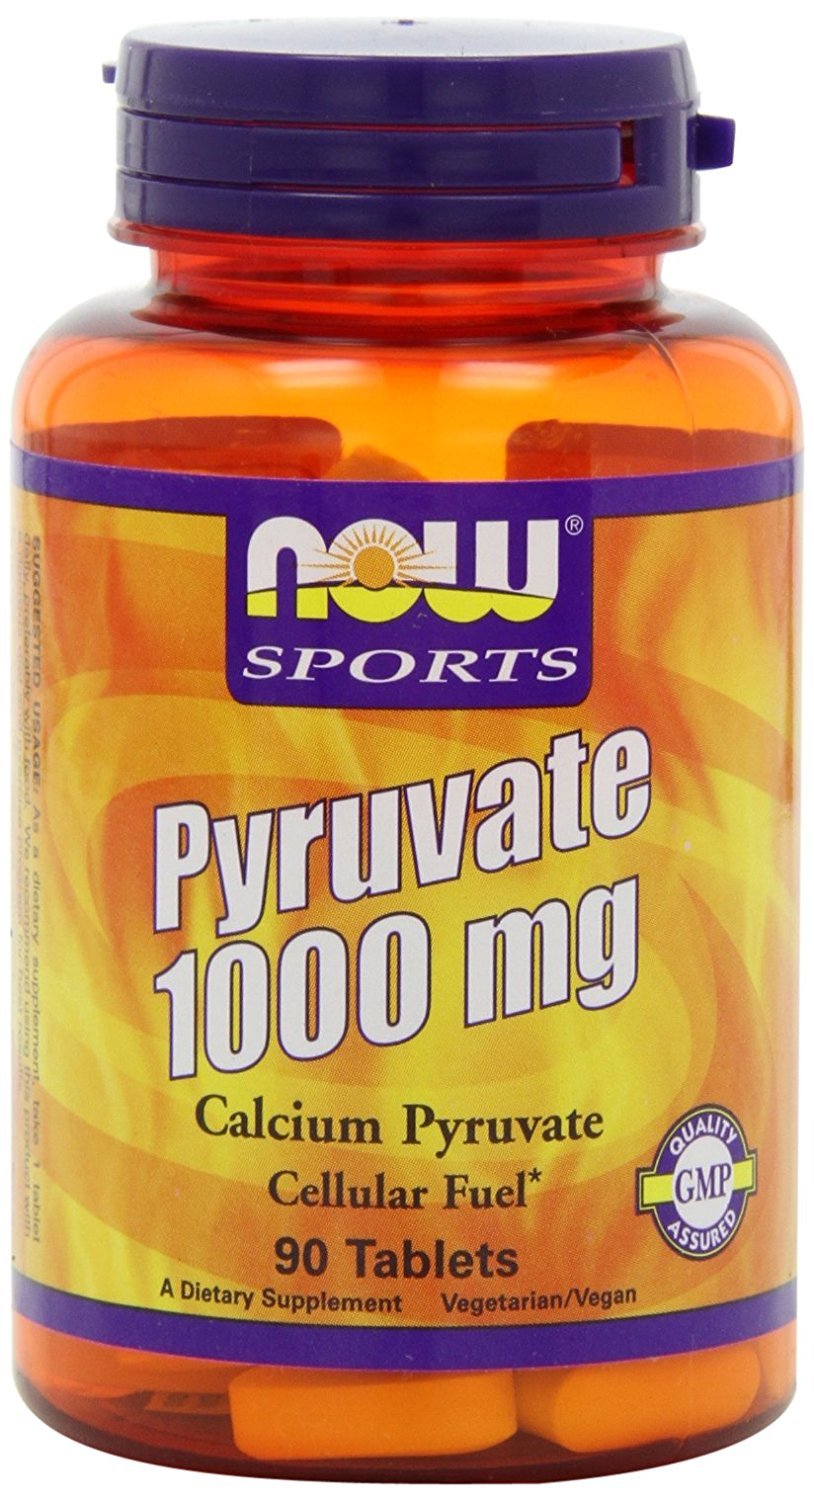 Pyruvate 1000 mg, 90 pcs, Now. Calcium Ca. 